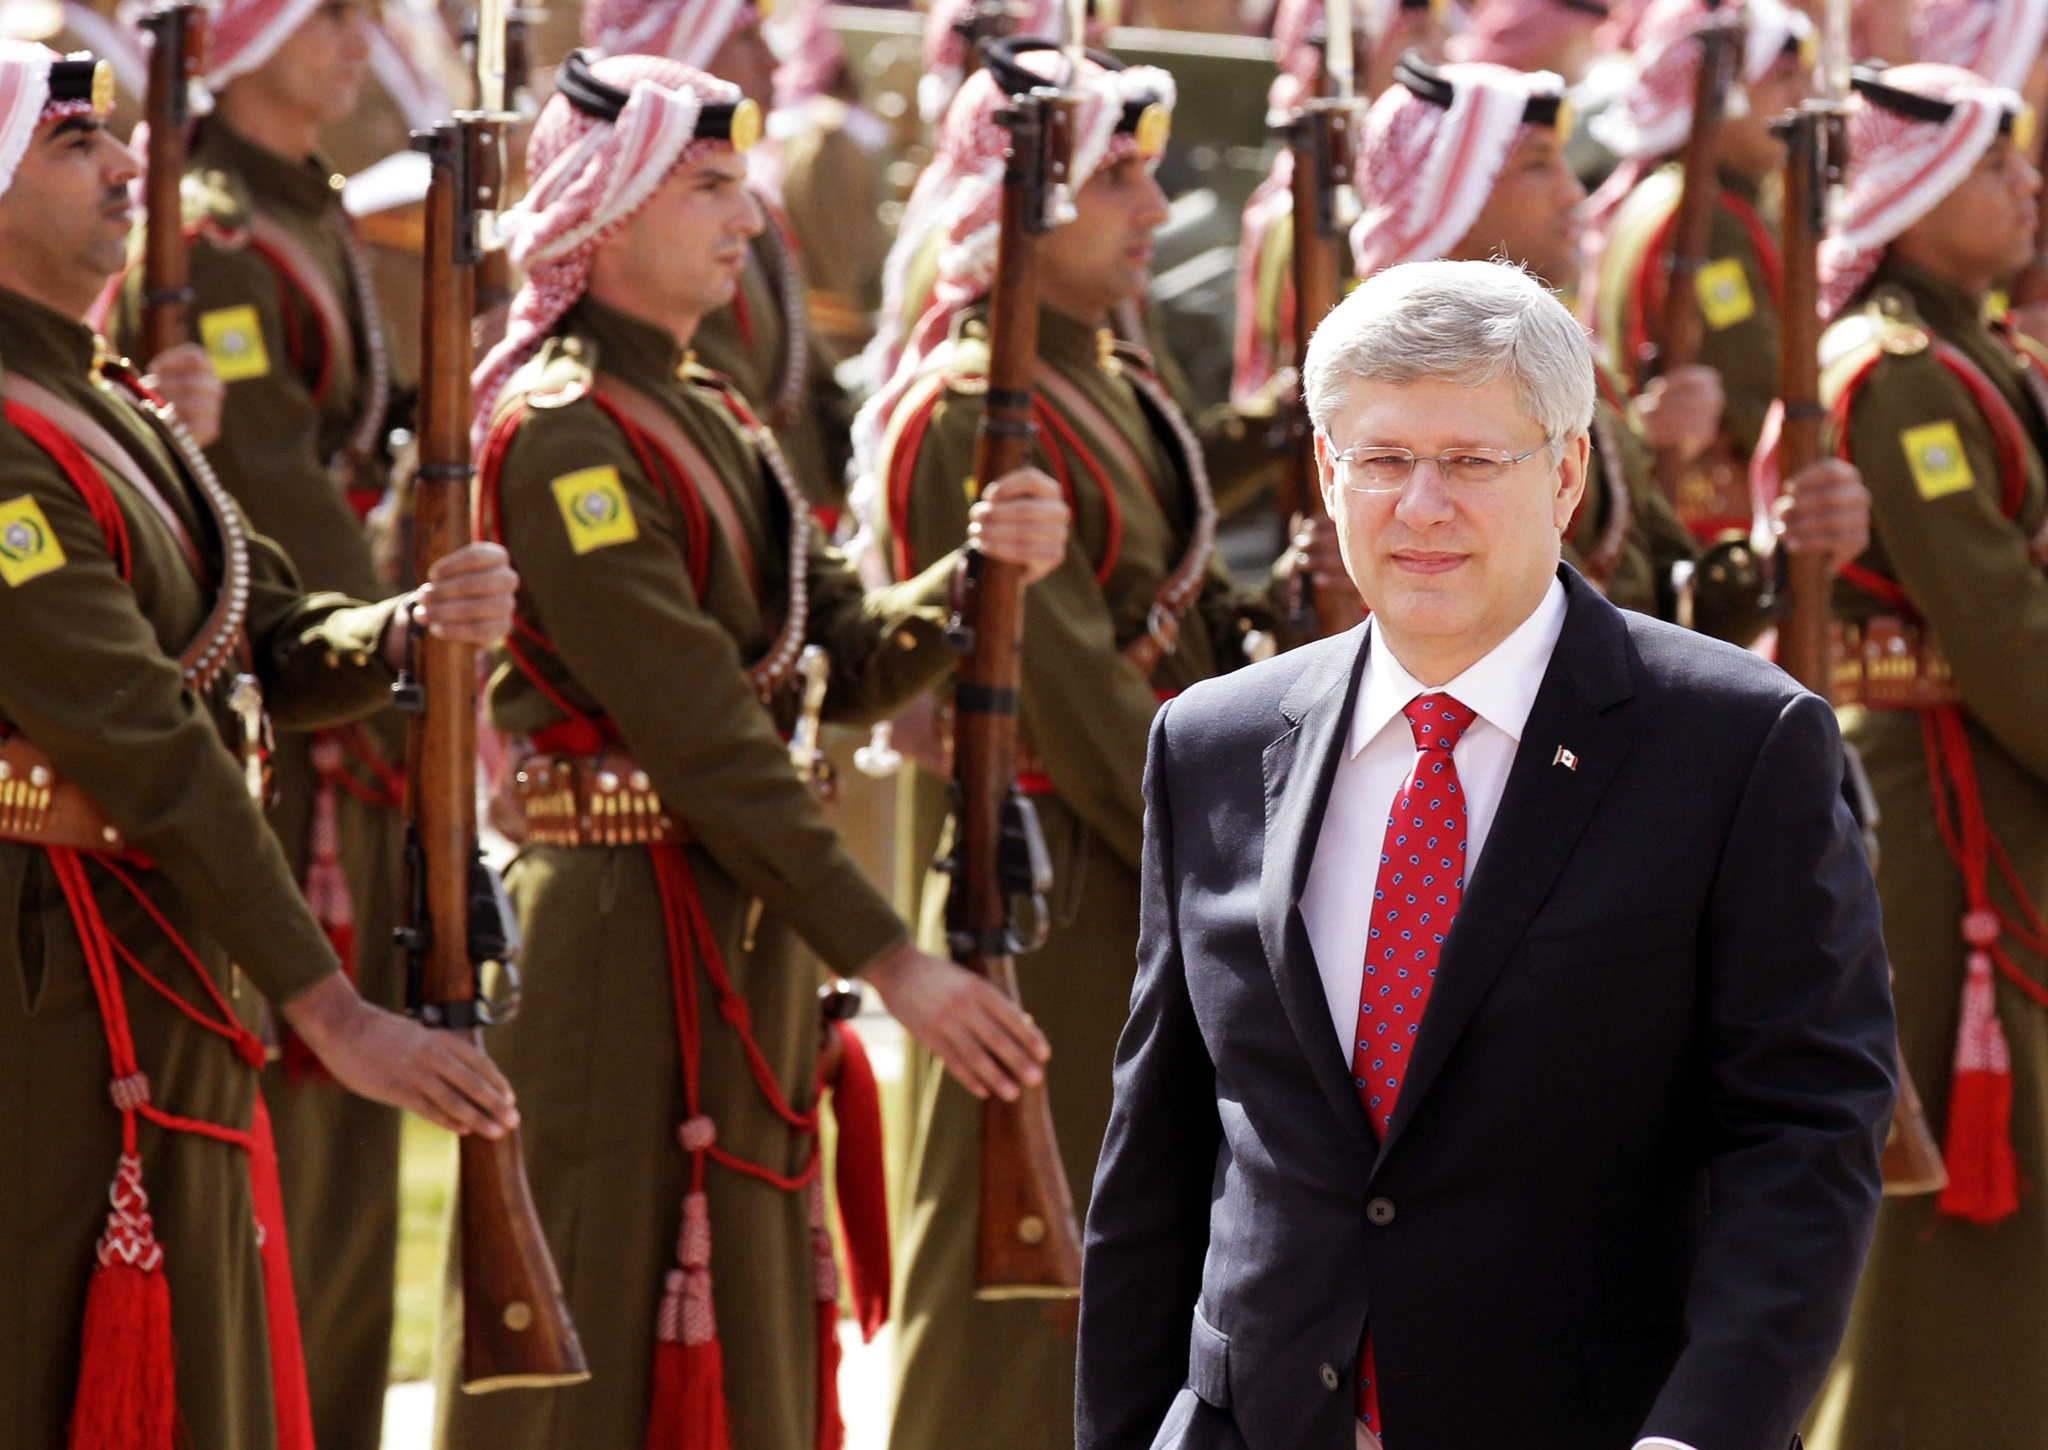 Canadian Prime Minister Stephen Harper visits Jordan last year